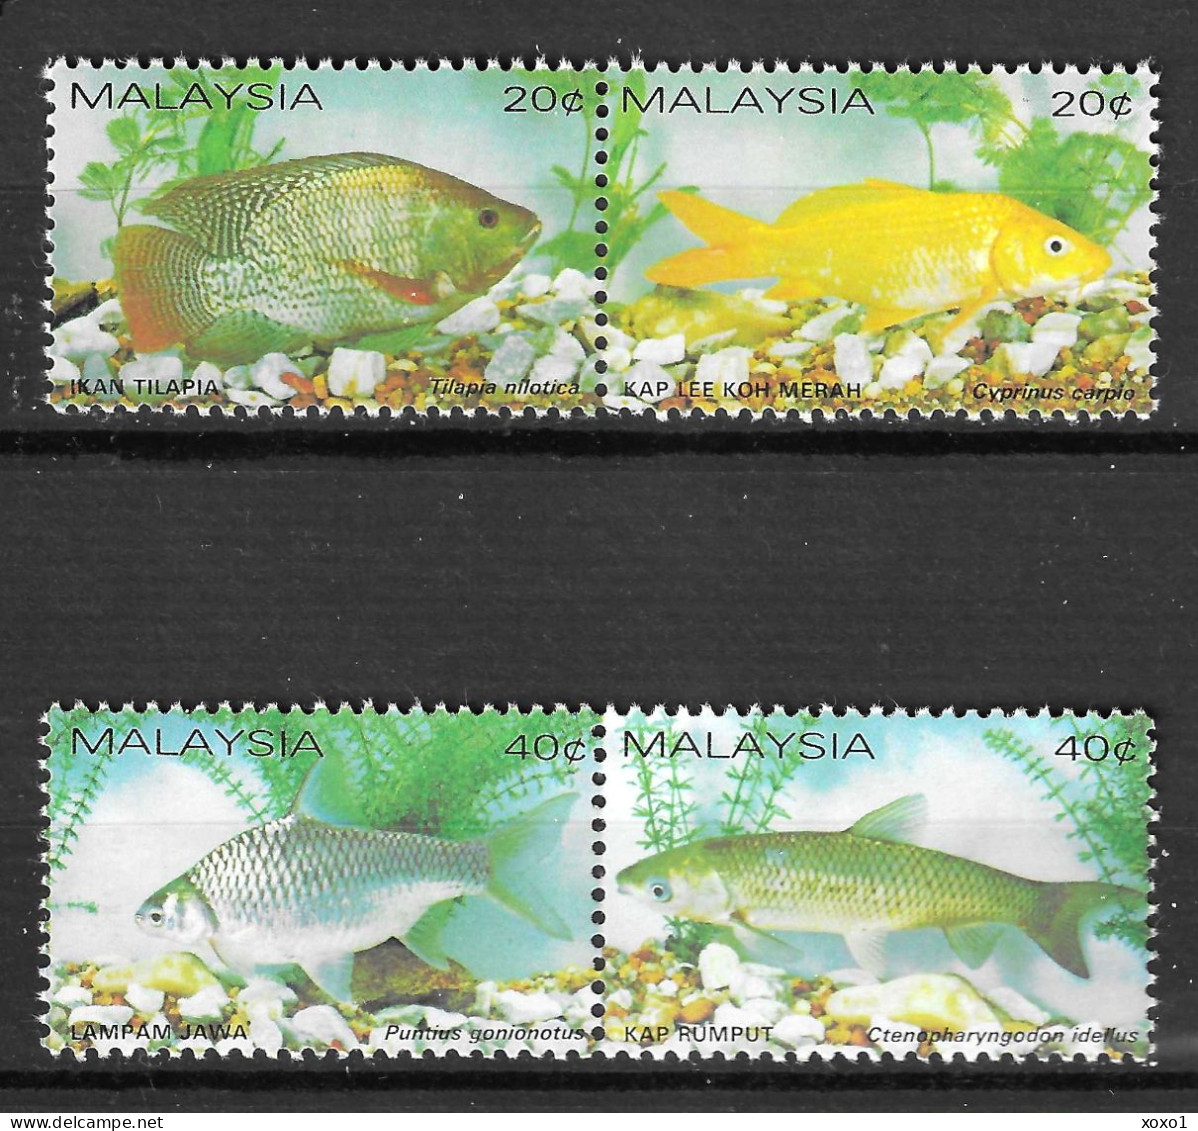 Malaysia 1983 MiNr. 258 - 261 Marine Life Fishes 4v   MNH** 12.00 € - Maleisië (1964-...)